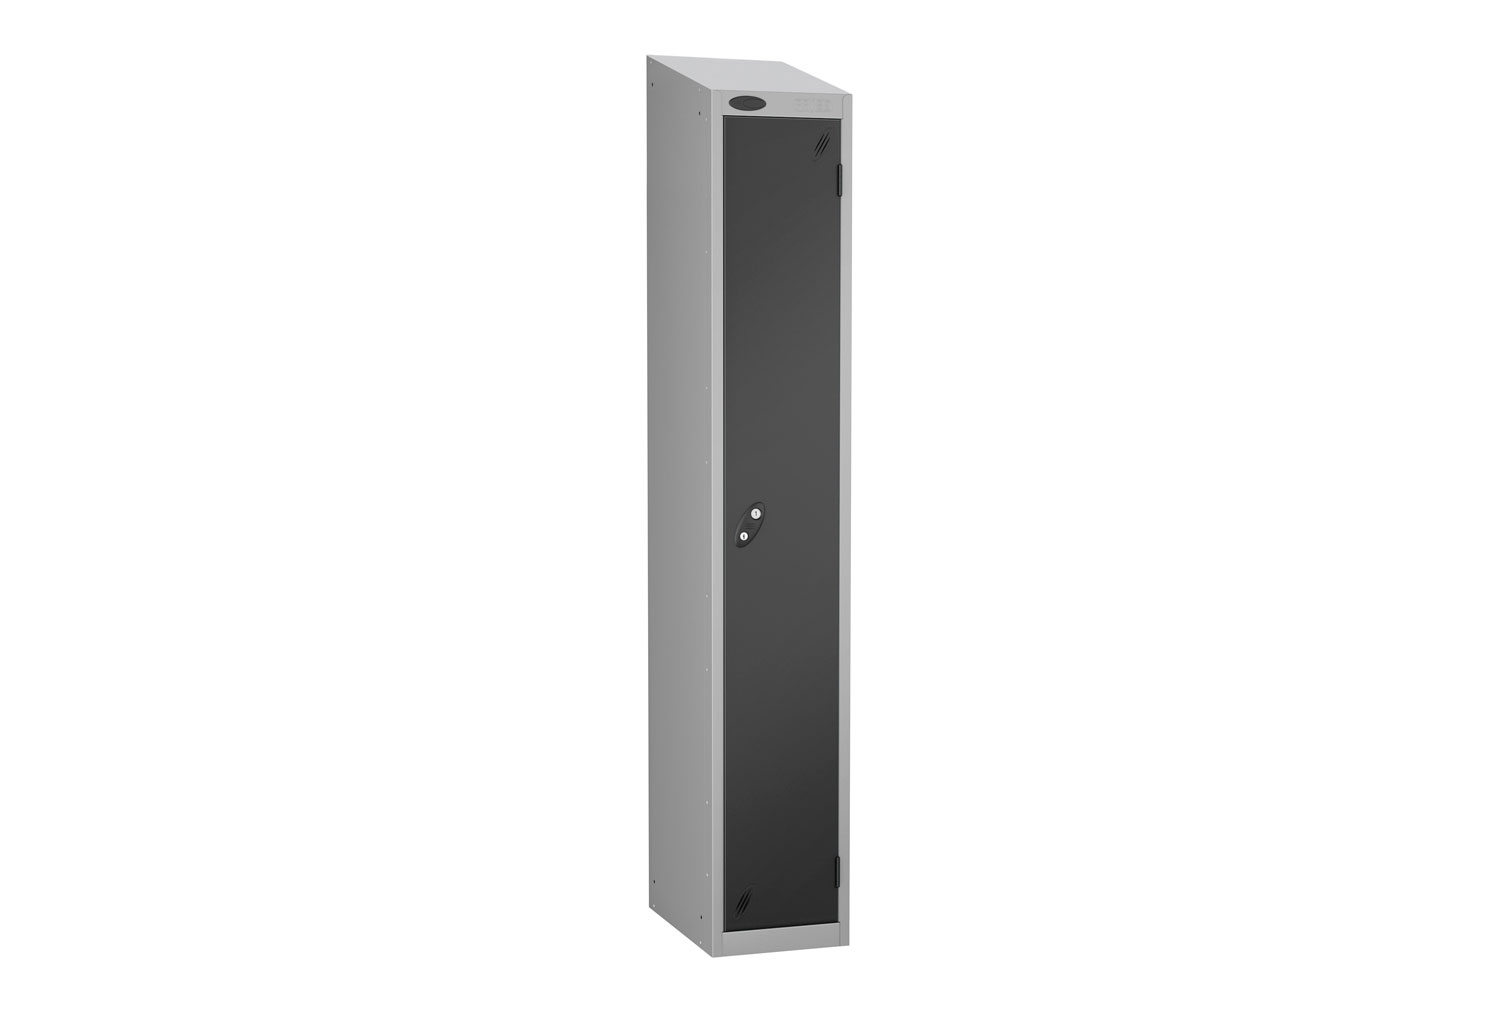 Probe Everyday 1 Door Locker With Sloping Top, 38wx46dx193h (cm), Hasp Lock, Silver Body, Black